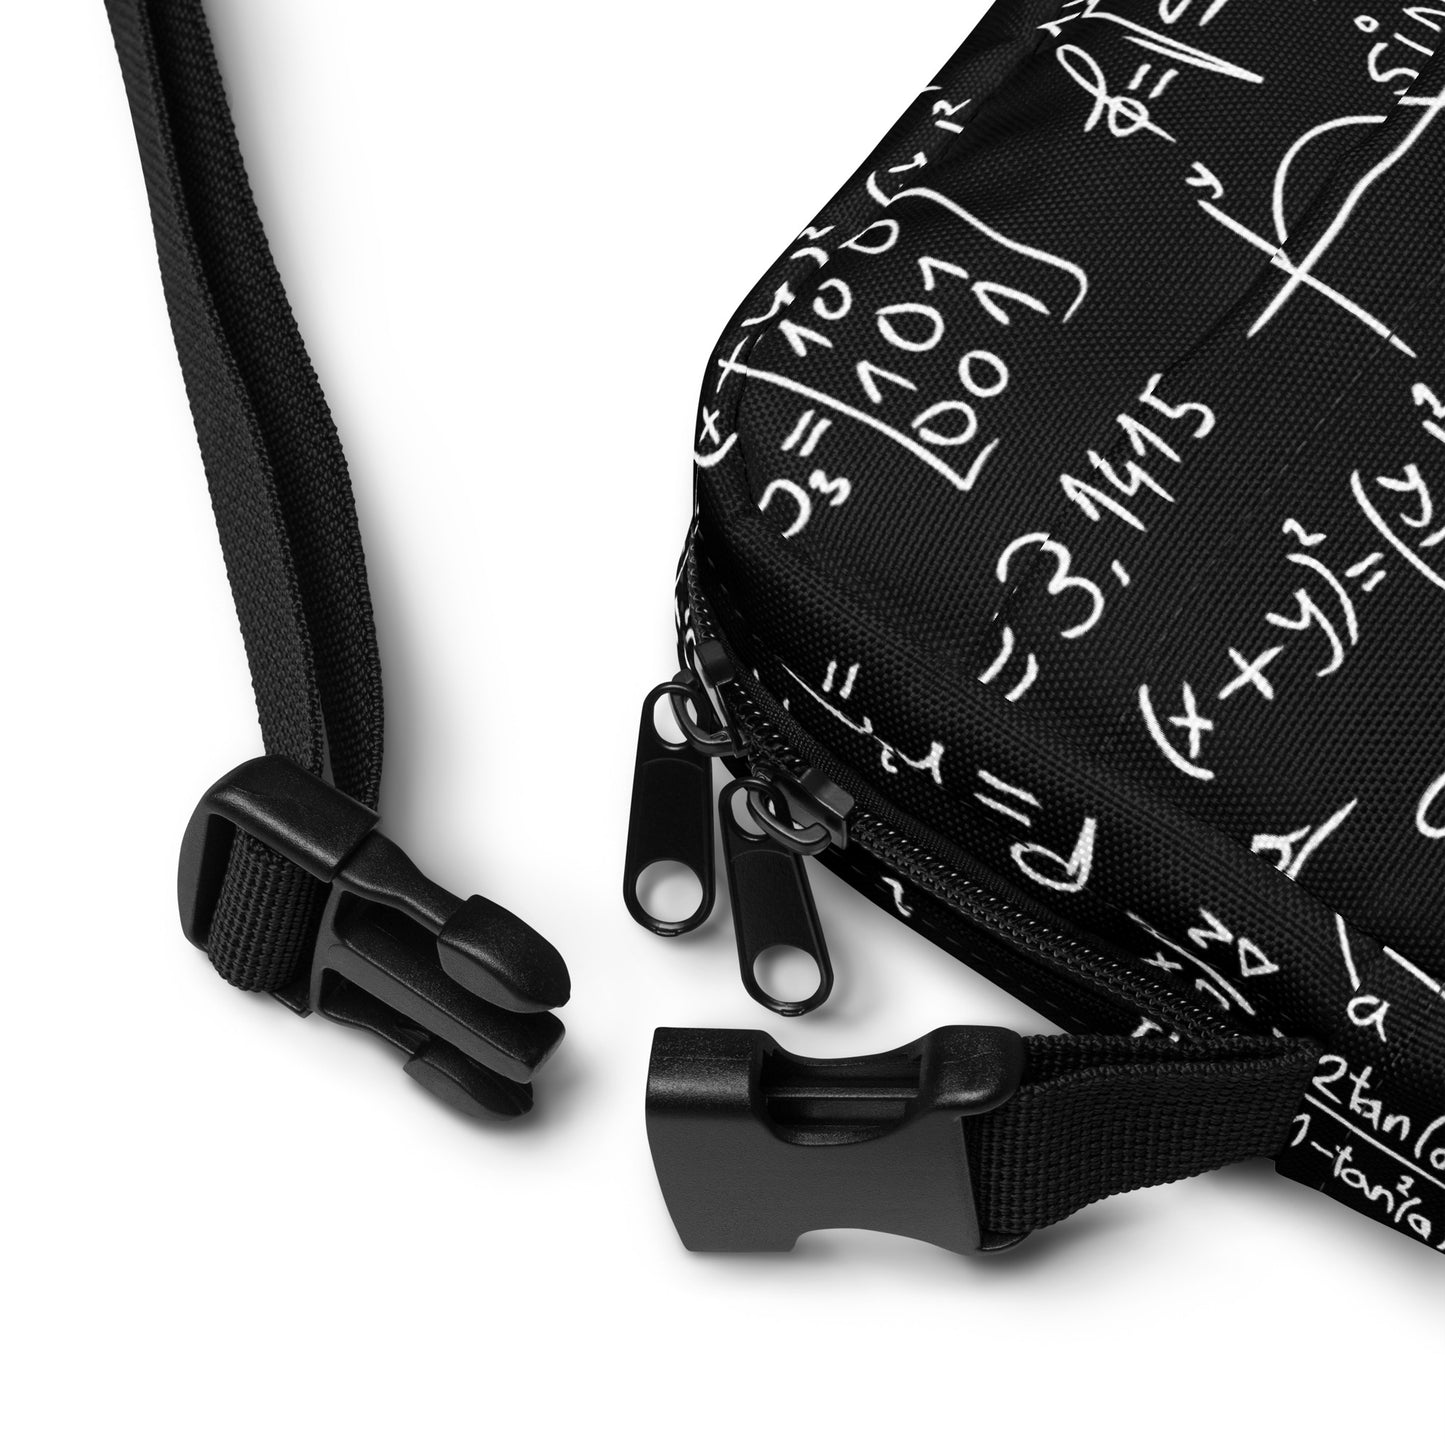 Equations - Utility crossbody bag Utility Cross Body Bag Maths Science